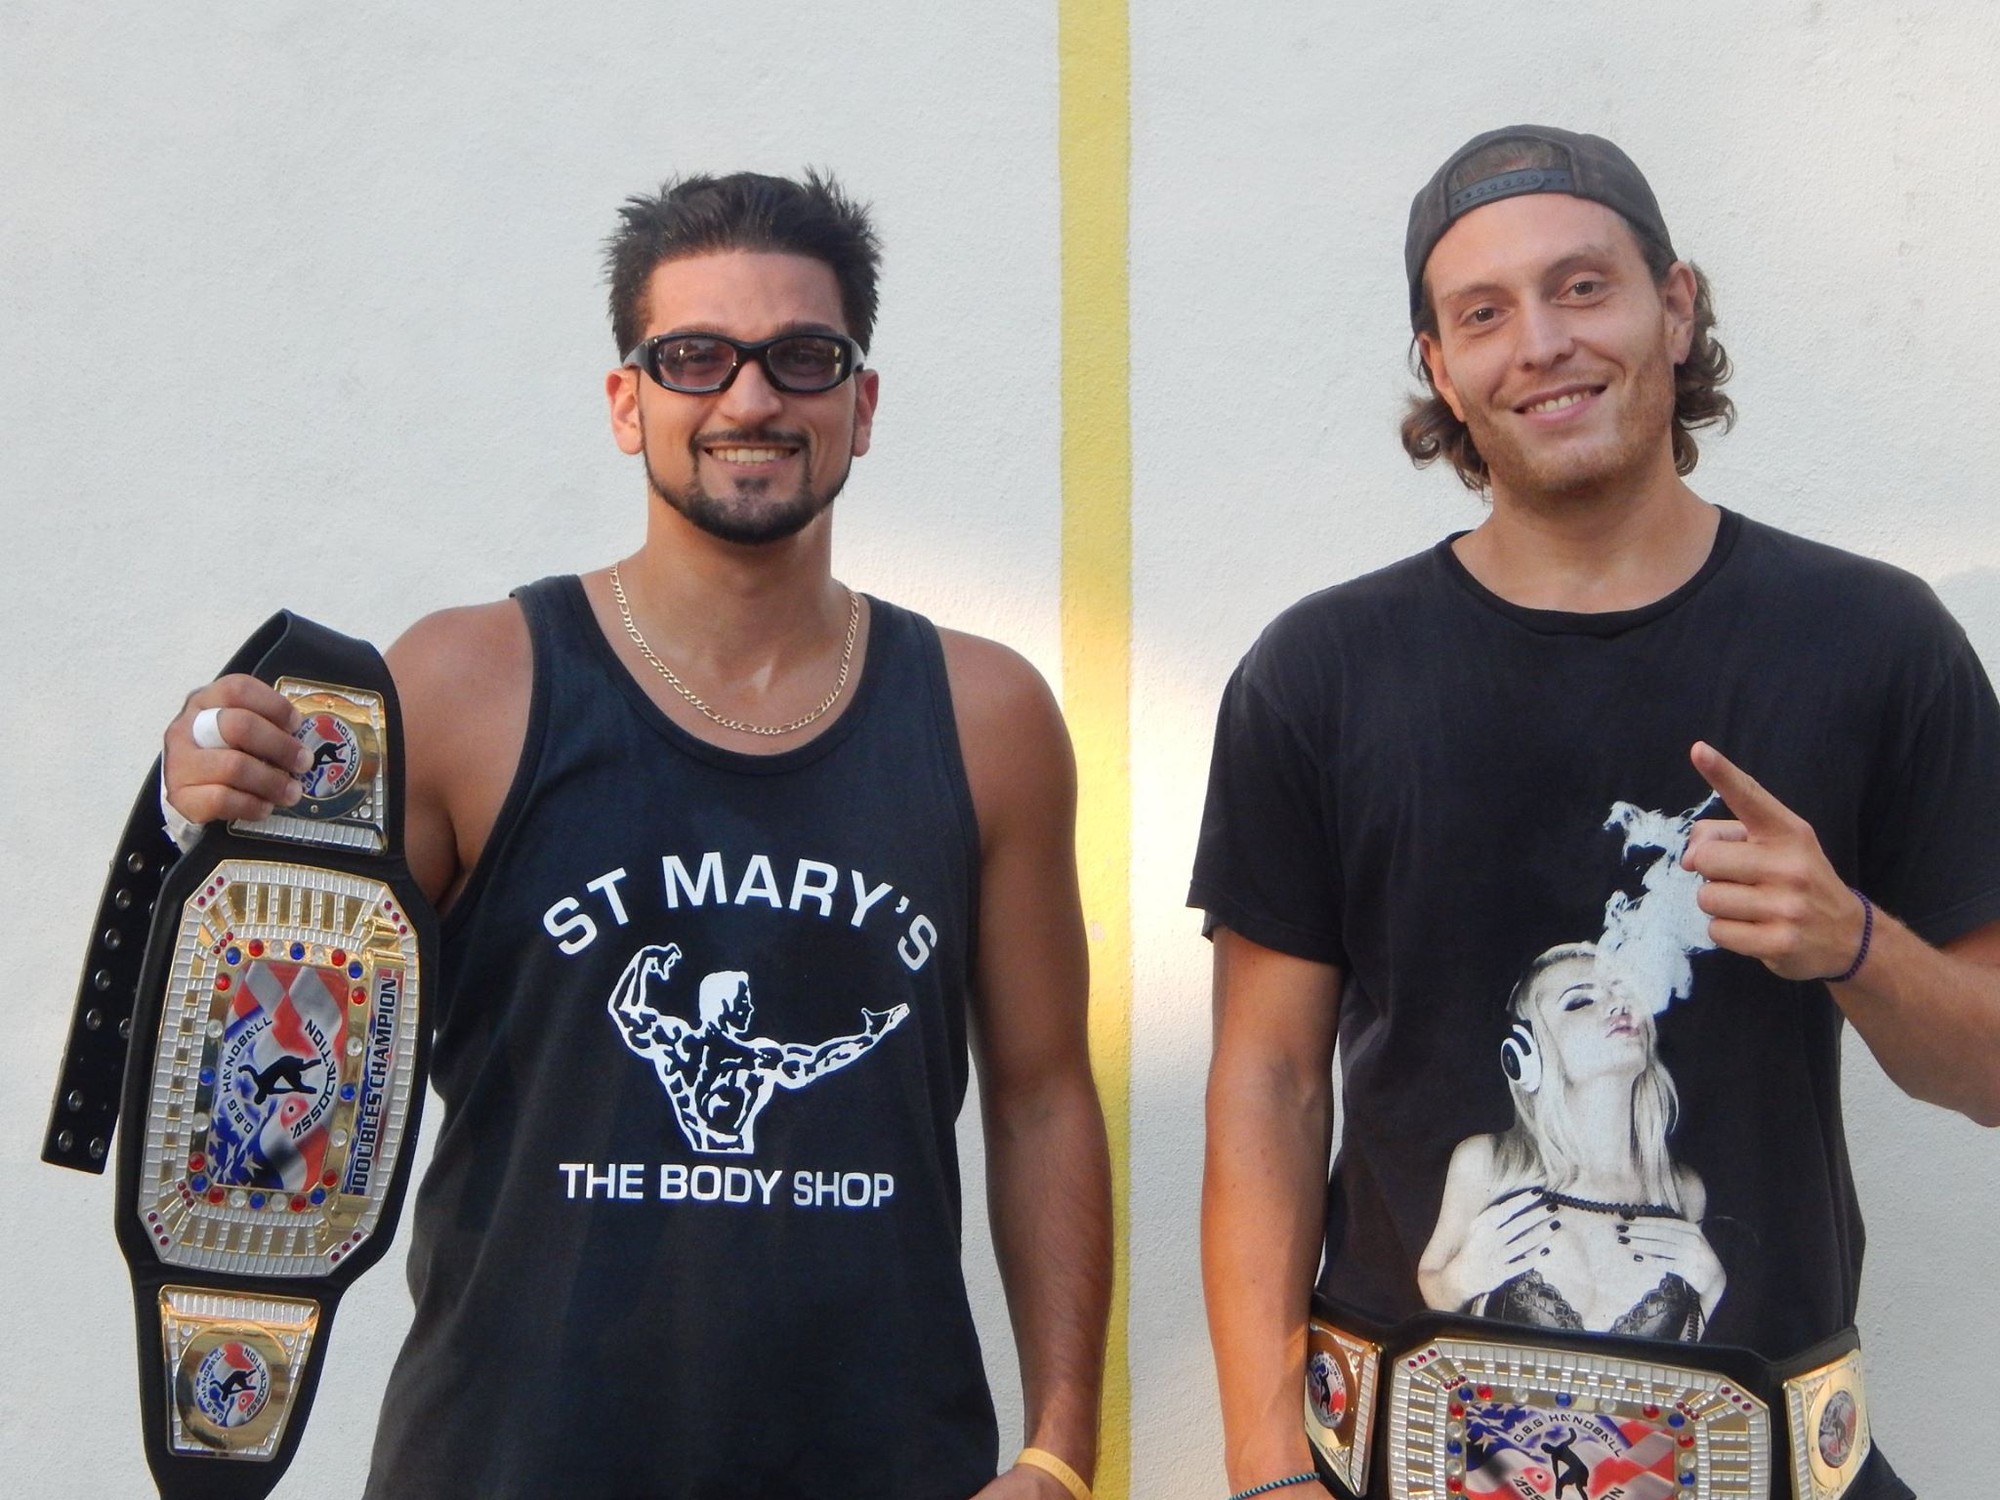 "OBG Belt Champions 2015" Frankie & Mike